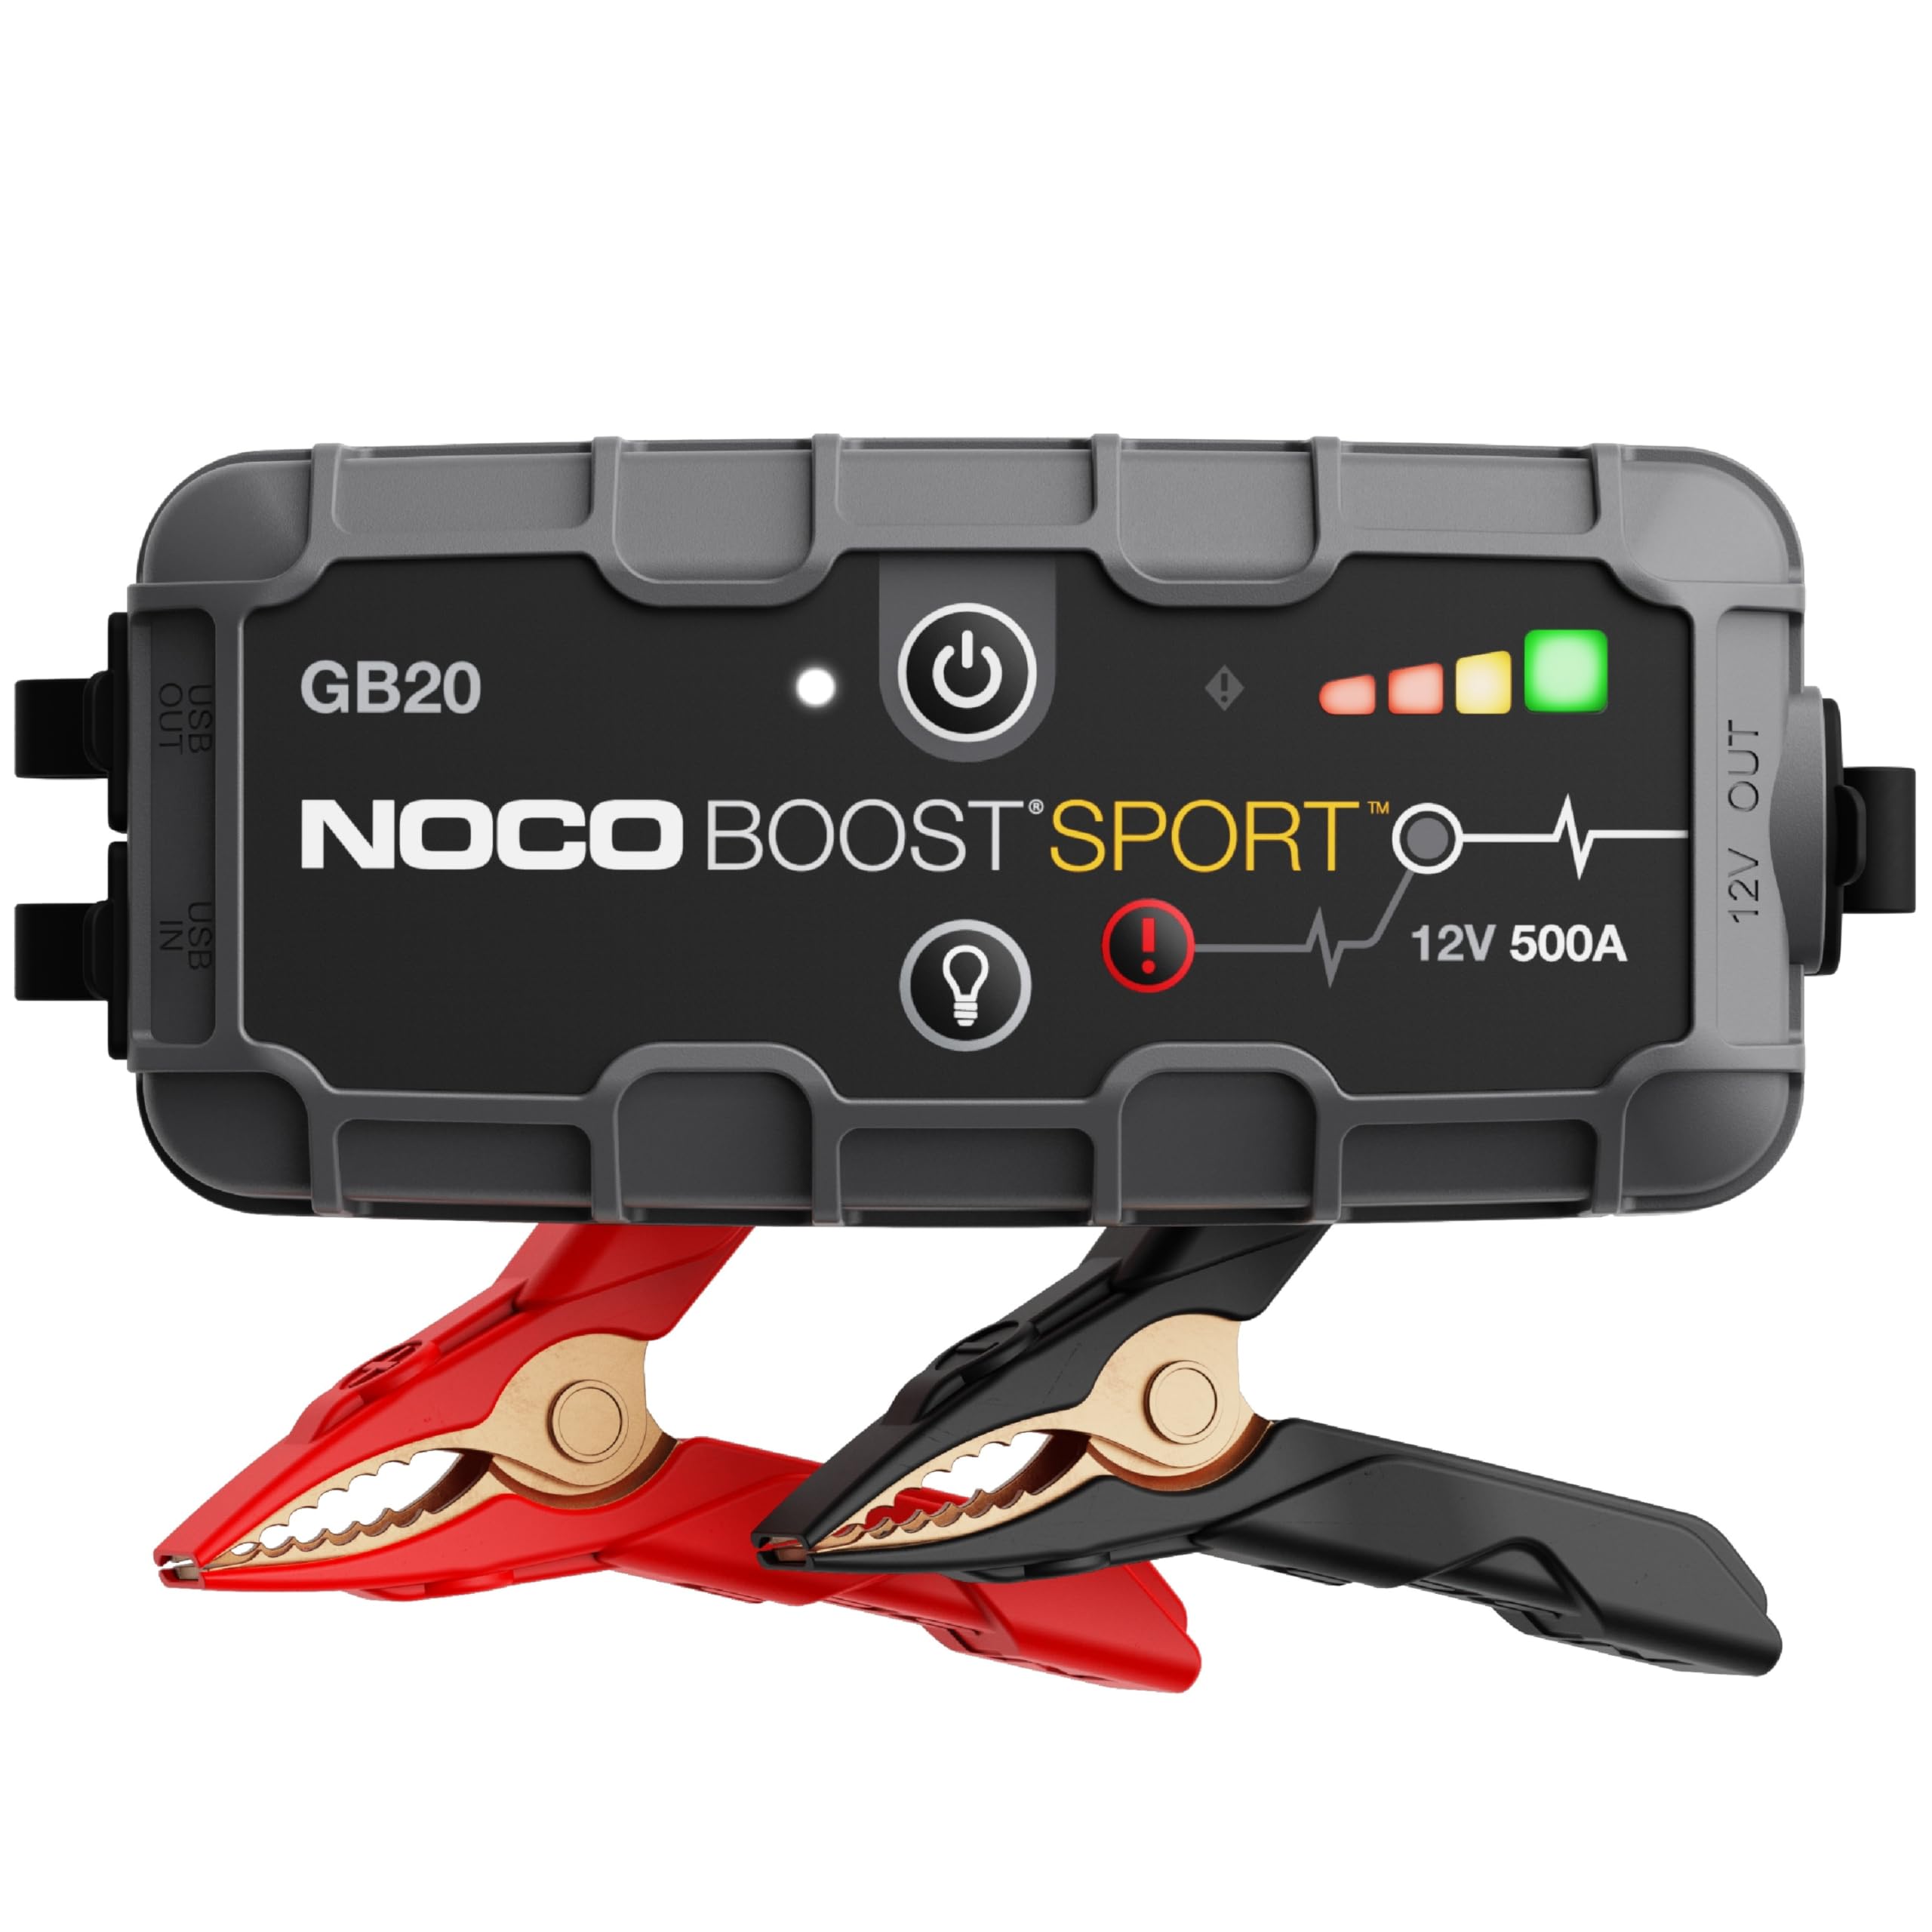  NOCO Boost Sport GB20 500 安培 12 伏超安全锂应急启动箱、汽车电池升压器包、便携式移动电源充电器和跨接电缆，适用于最多 4 升汽油发动机，400 安培，黑色...